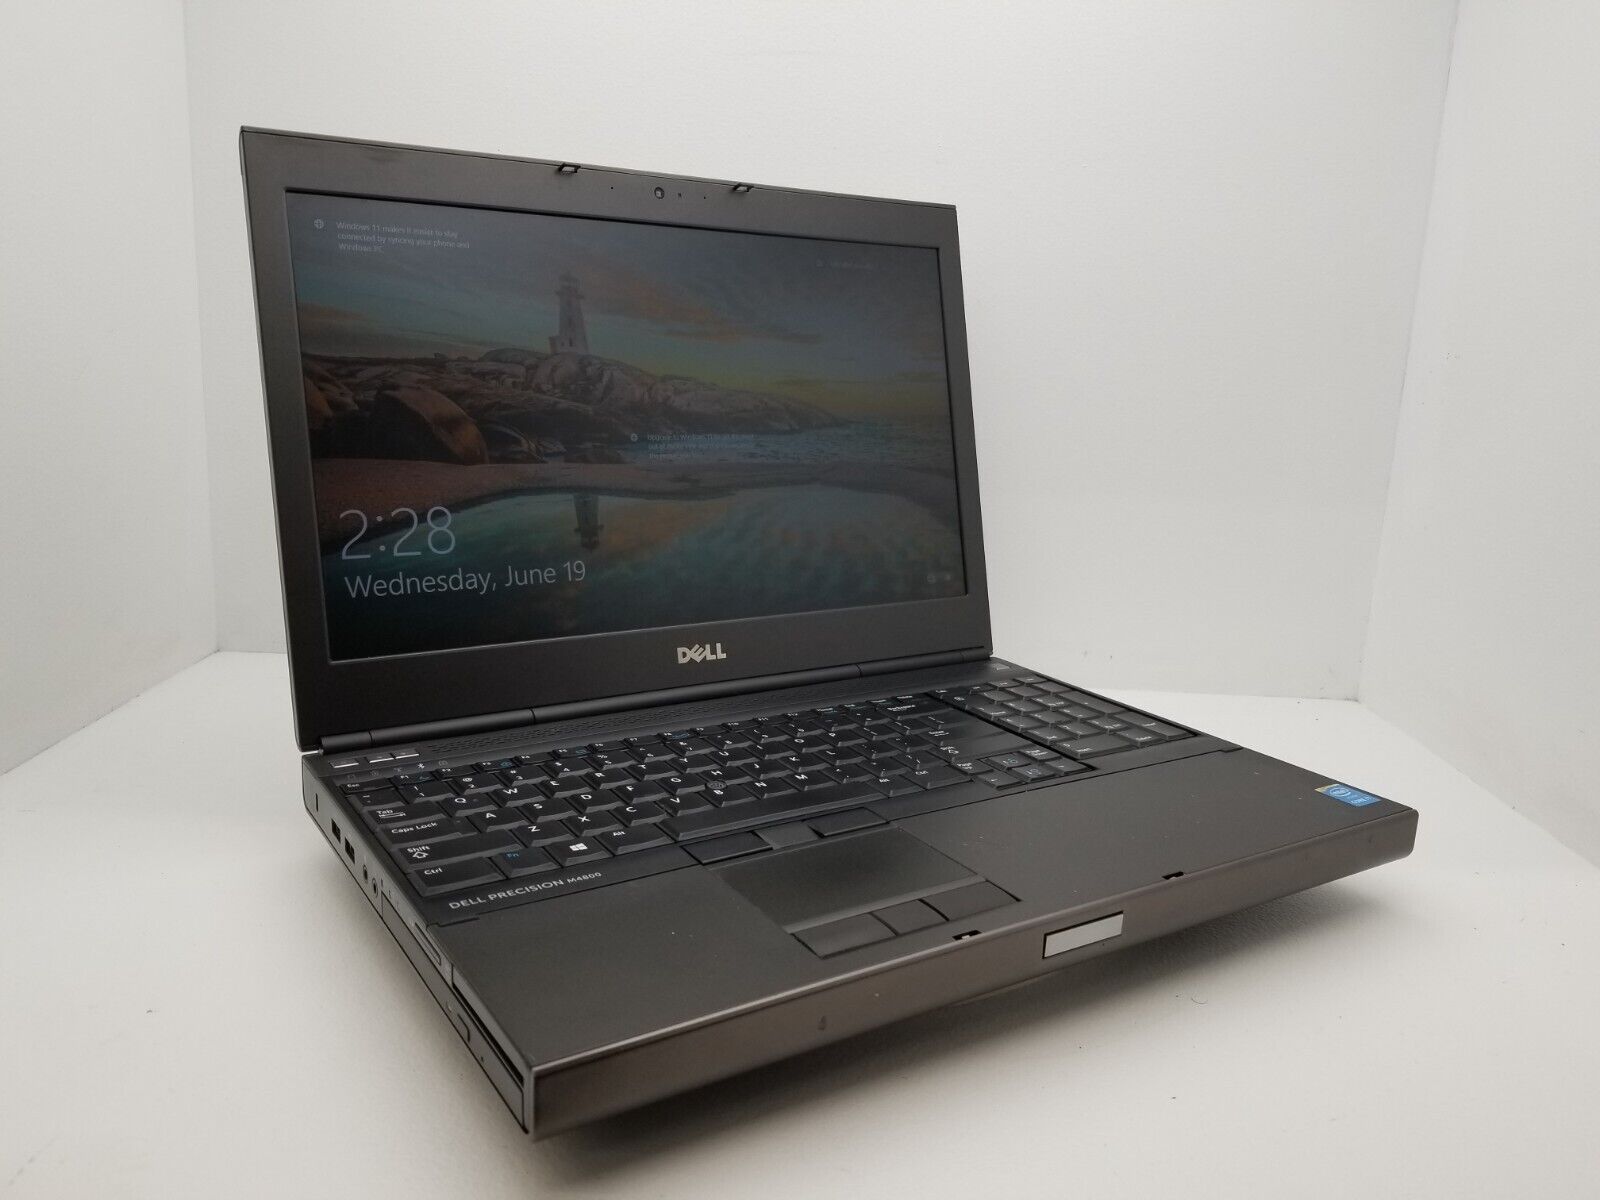 Dell Precision M4800 Powerful Laptop, Windows 10, 15.6